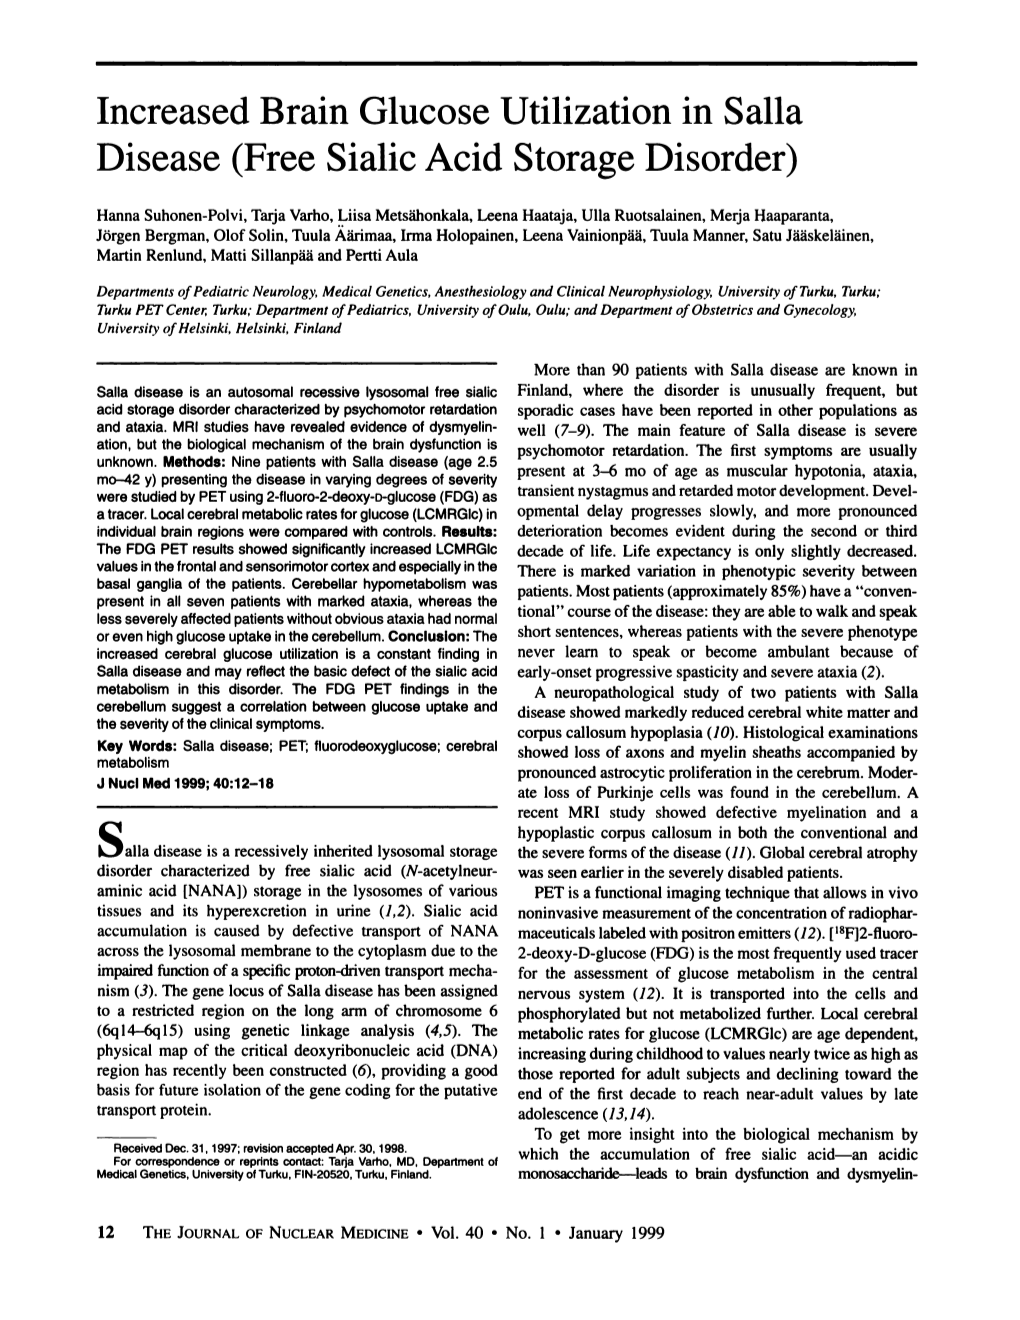 Increased Brain Glucose Utilization in Salla Disease (Free Sialic Acid Storage Disorder)